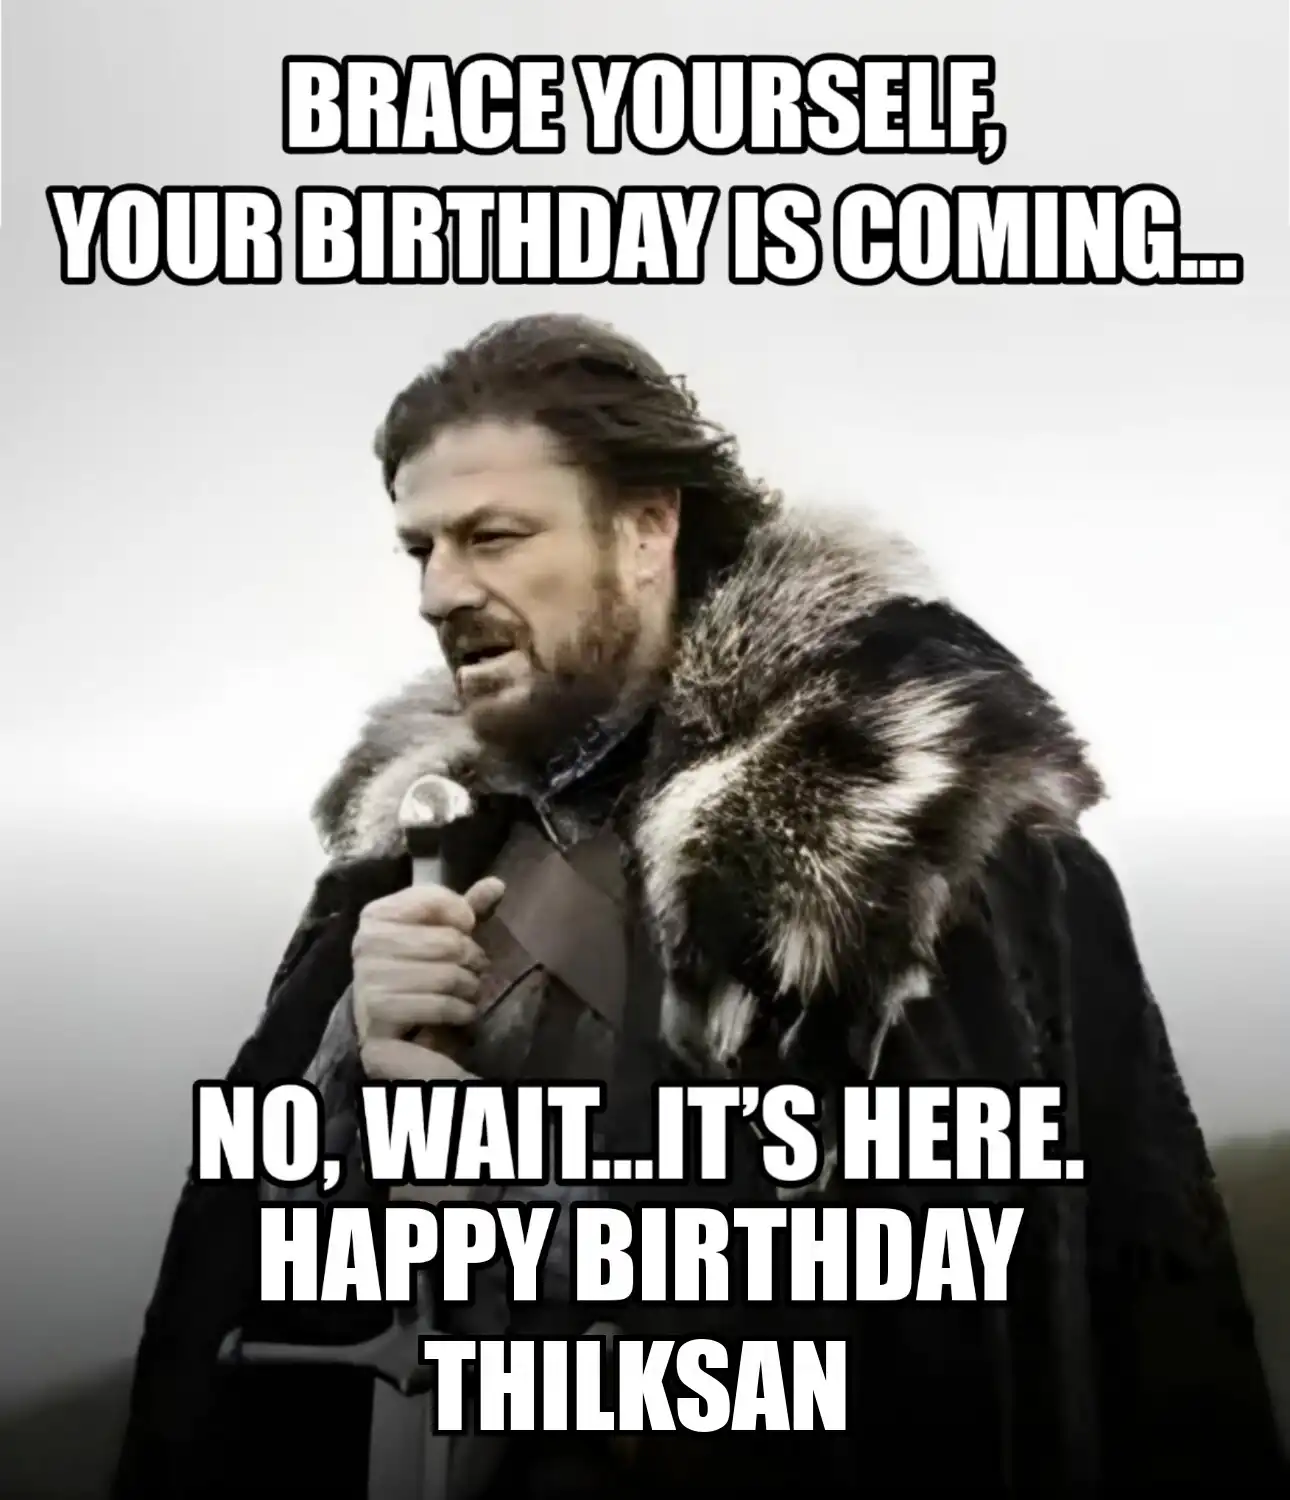 Happy Birthday Thilksan Brace Yourself Your Birthday Is Coming Meme